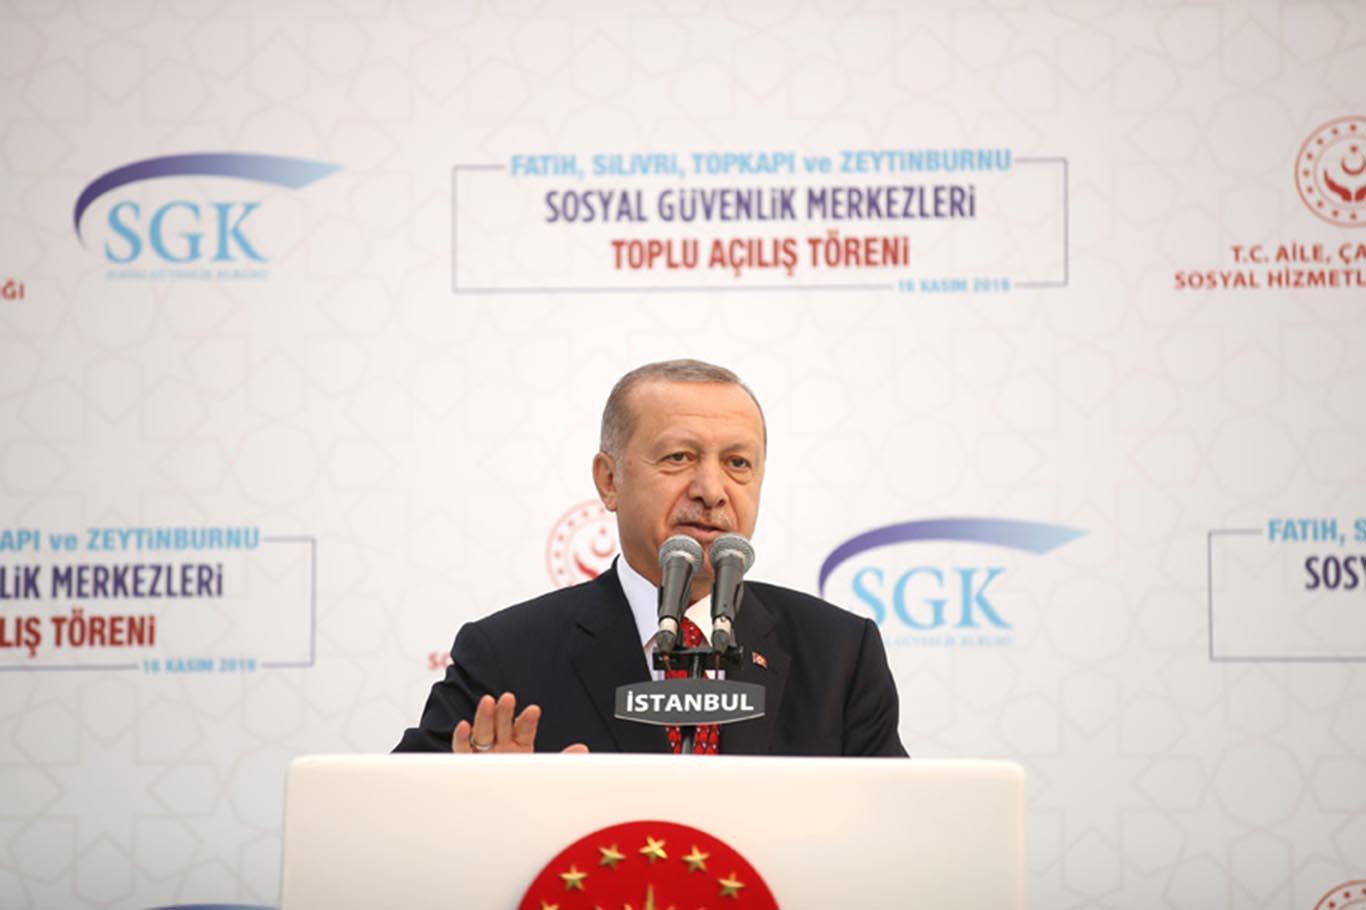 Turkey’s social security and healthcare services set an example: Erdoğan